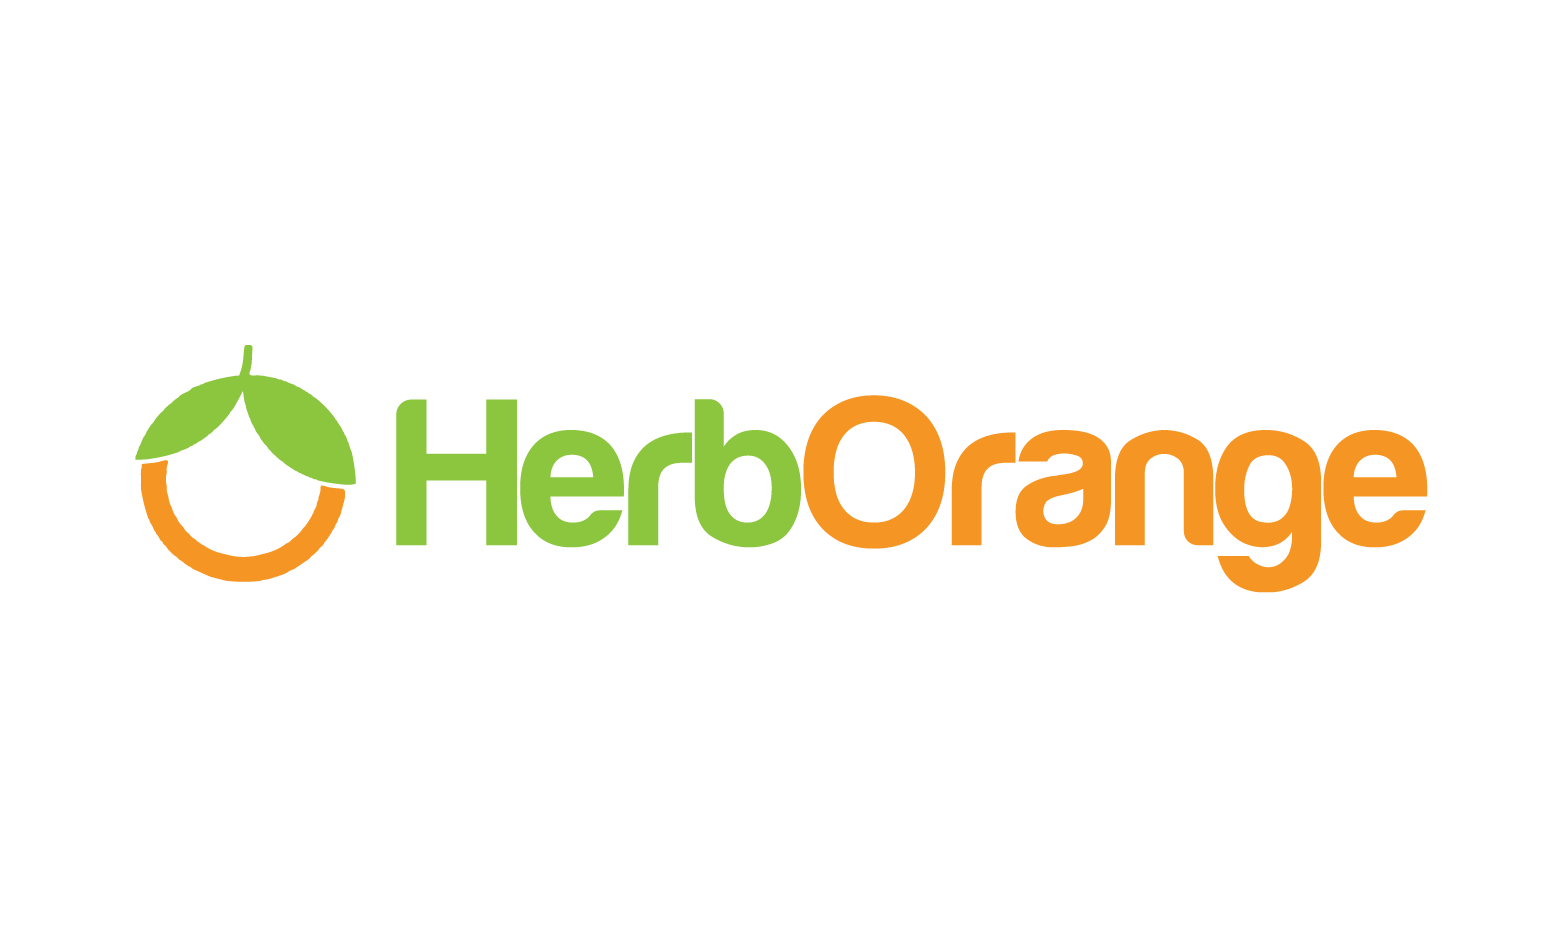 HerbOrange.com - Creative brandable domain for sale